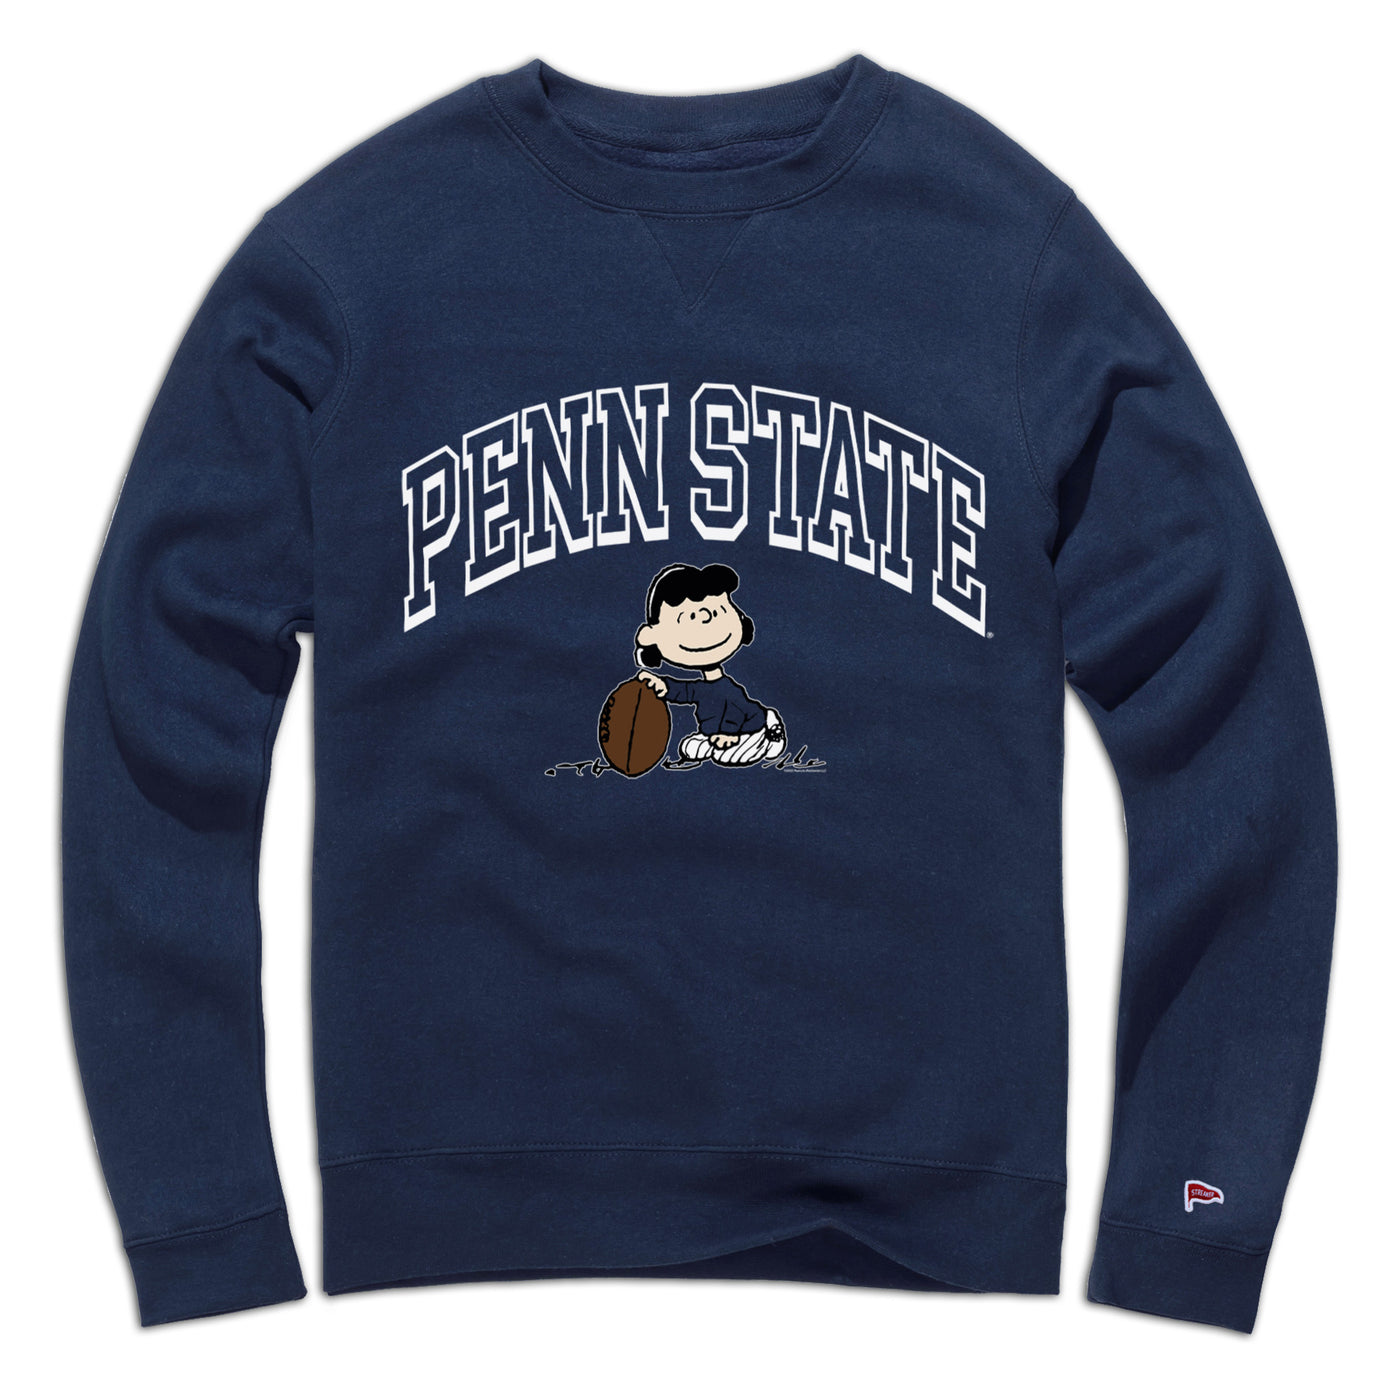 Peanuts x Penn State Lucy Football Crewneck Sweatshirt - Streaker Sports